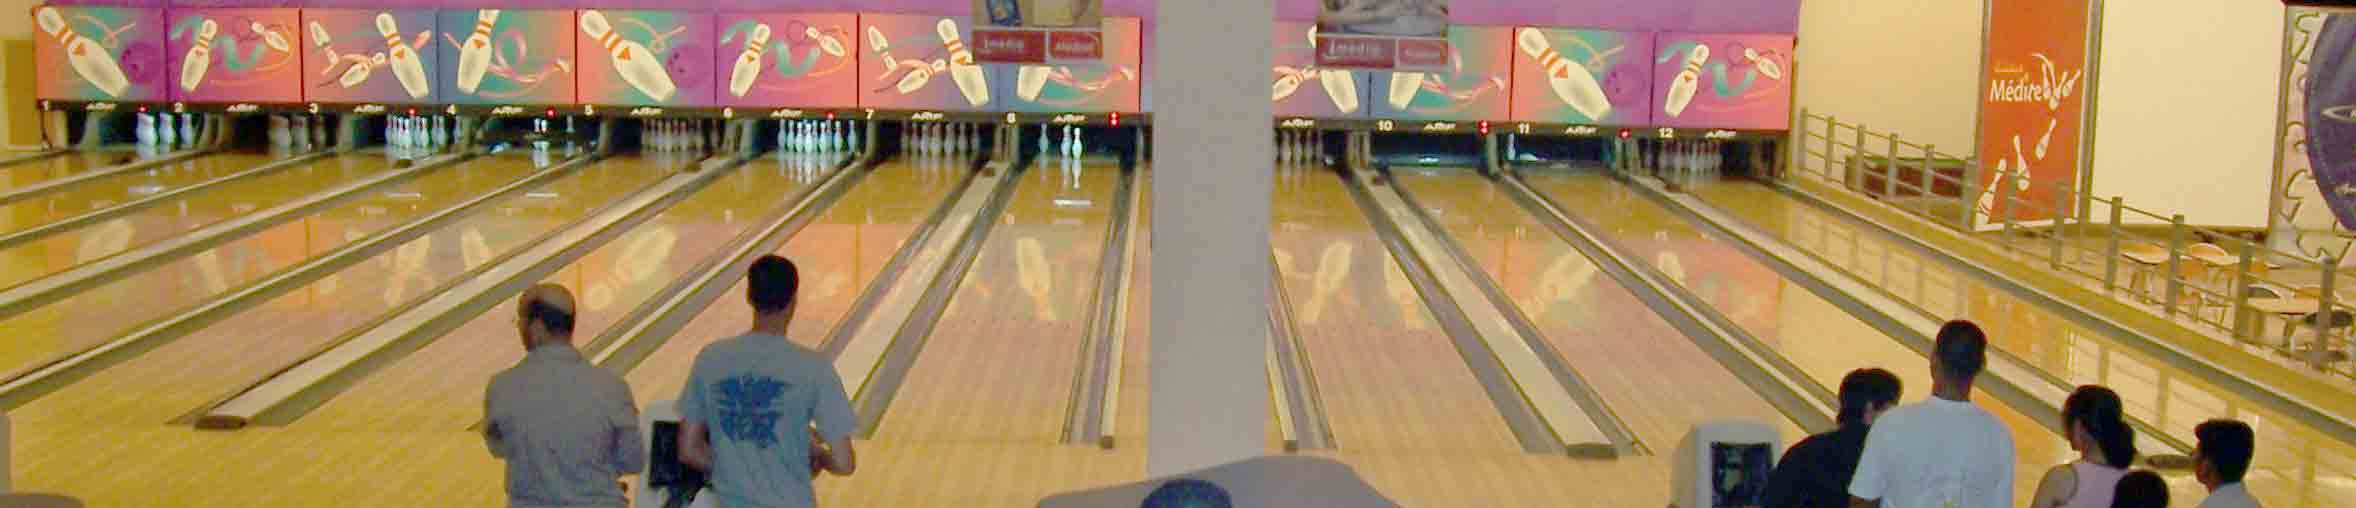 bowlinglanesRabat megamall.jpg